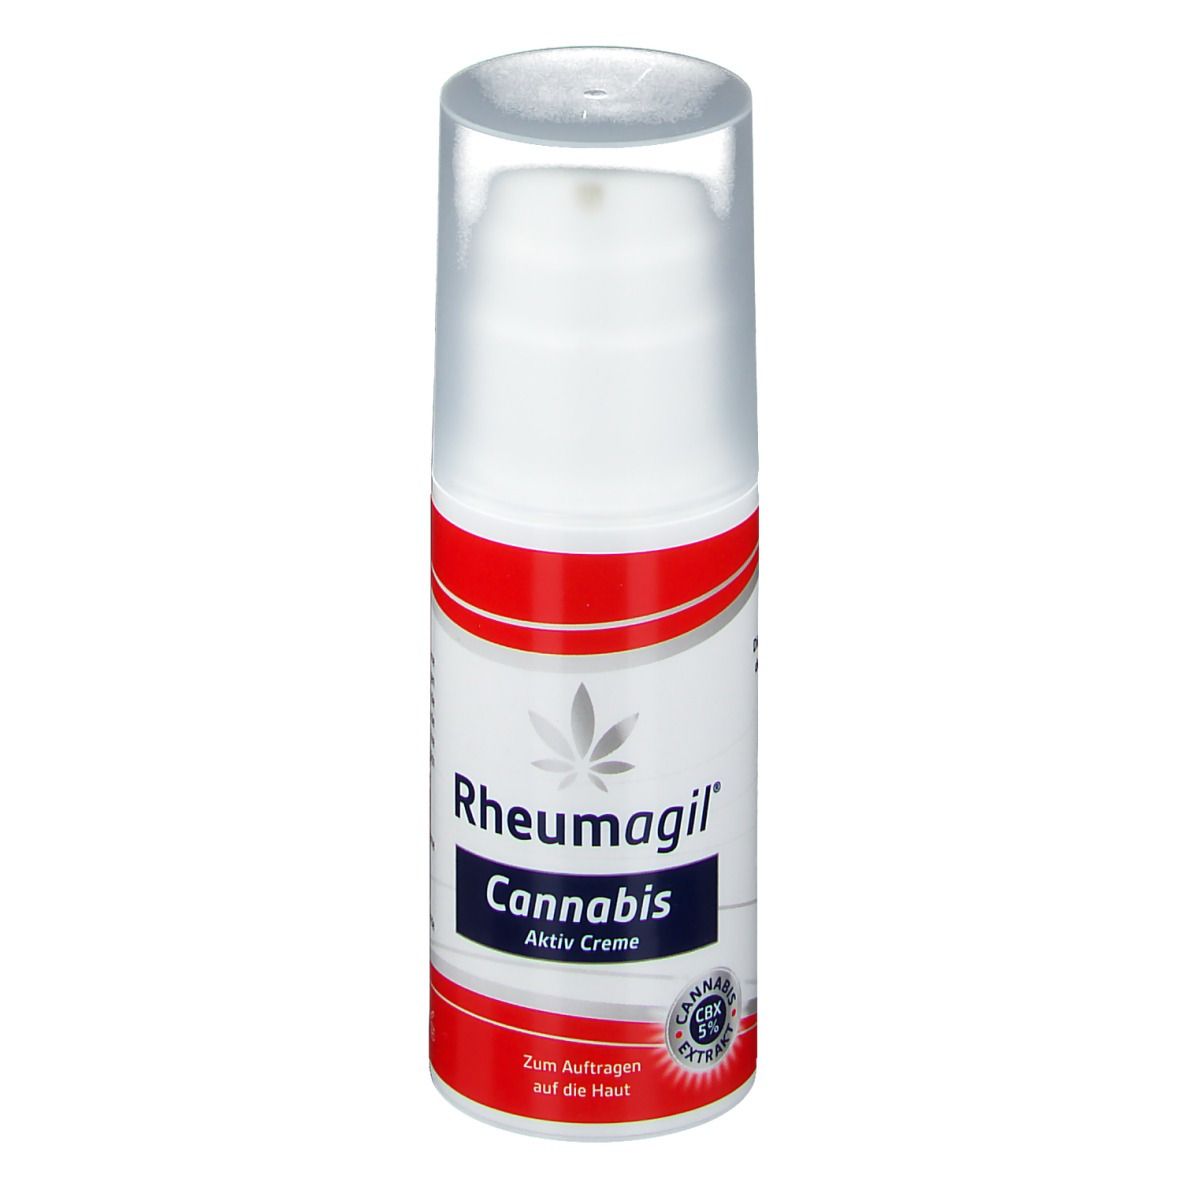 Rheumagil ® Cannabis Aktiv Creme